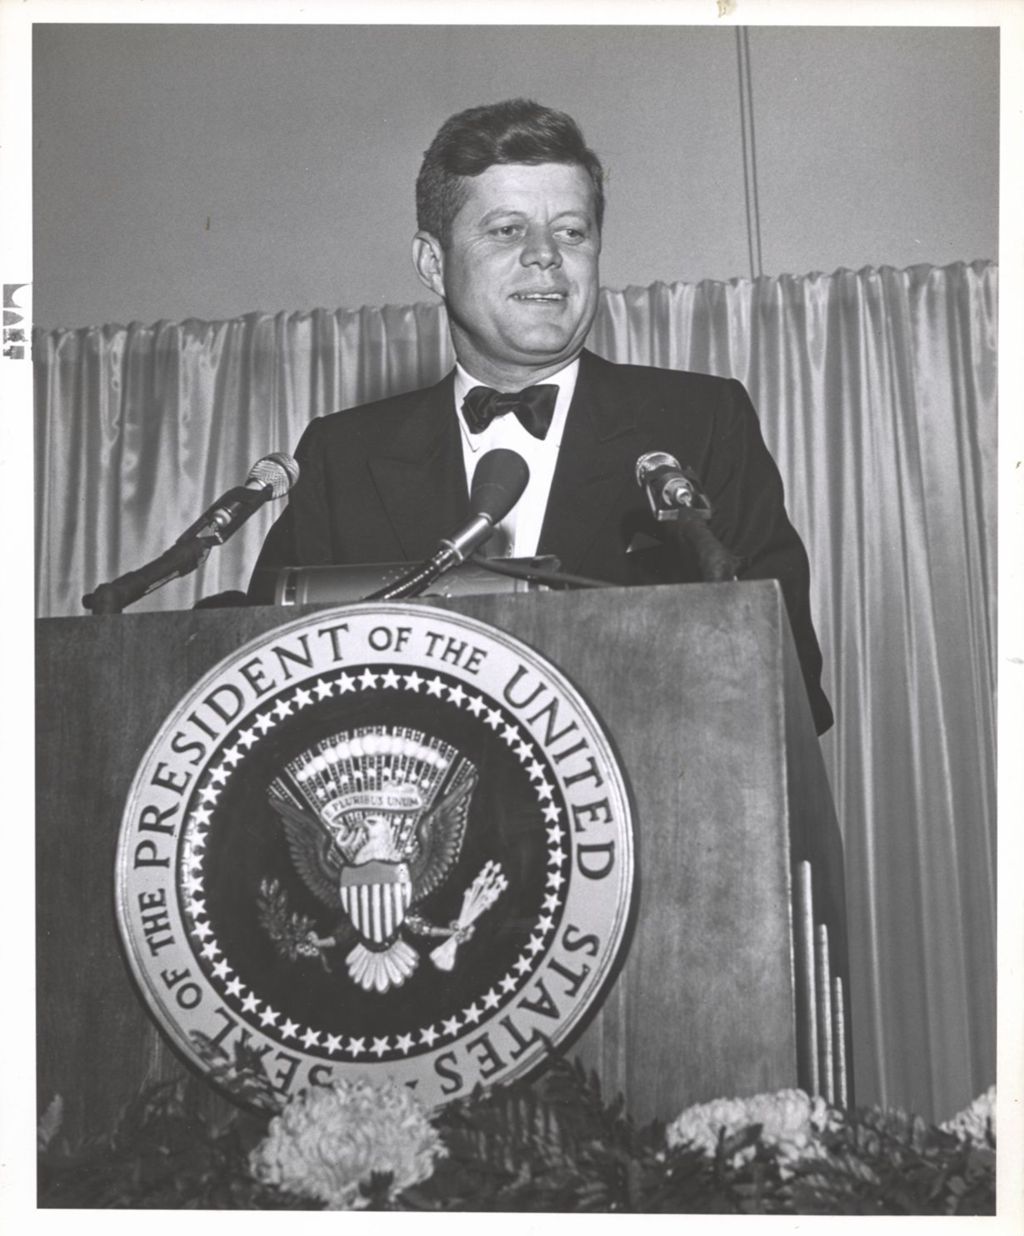 Miniature of John F. Kennedy at the speaker's podium at Democratic fundraising dinner